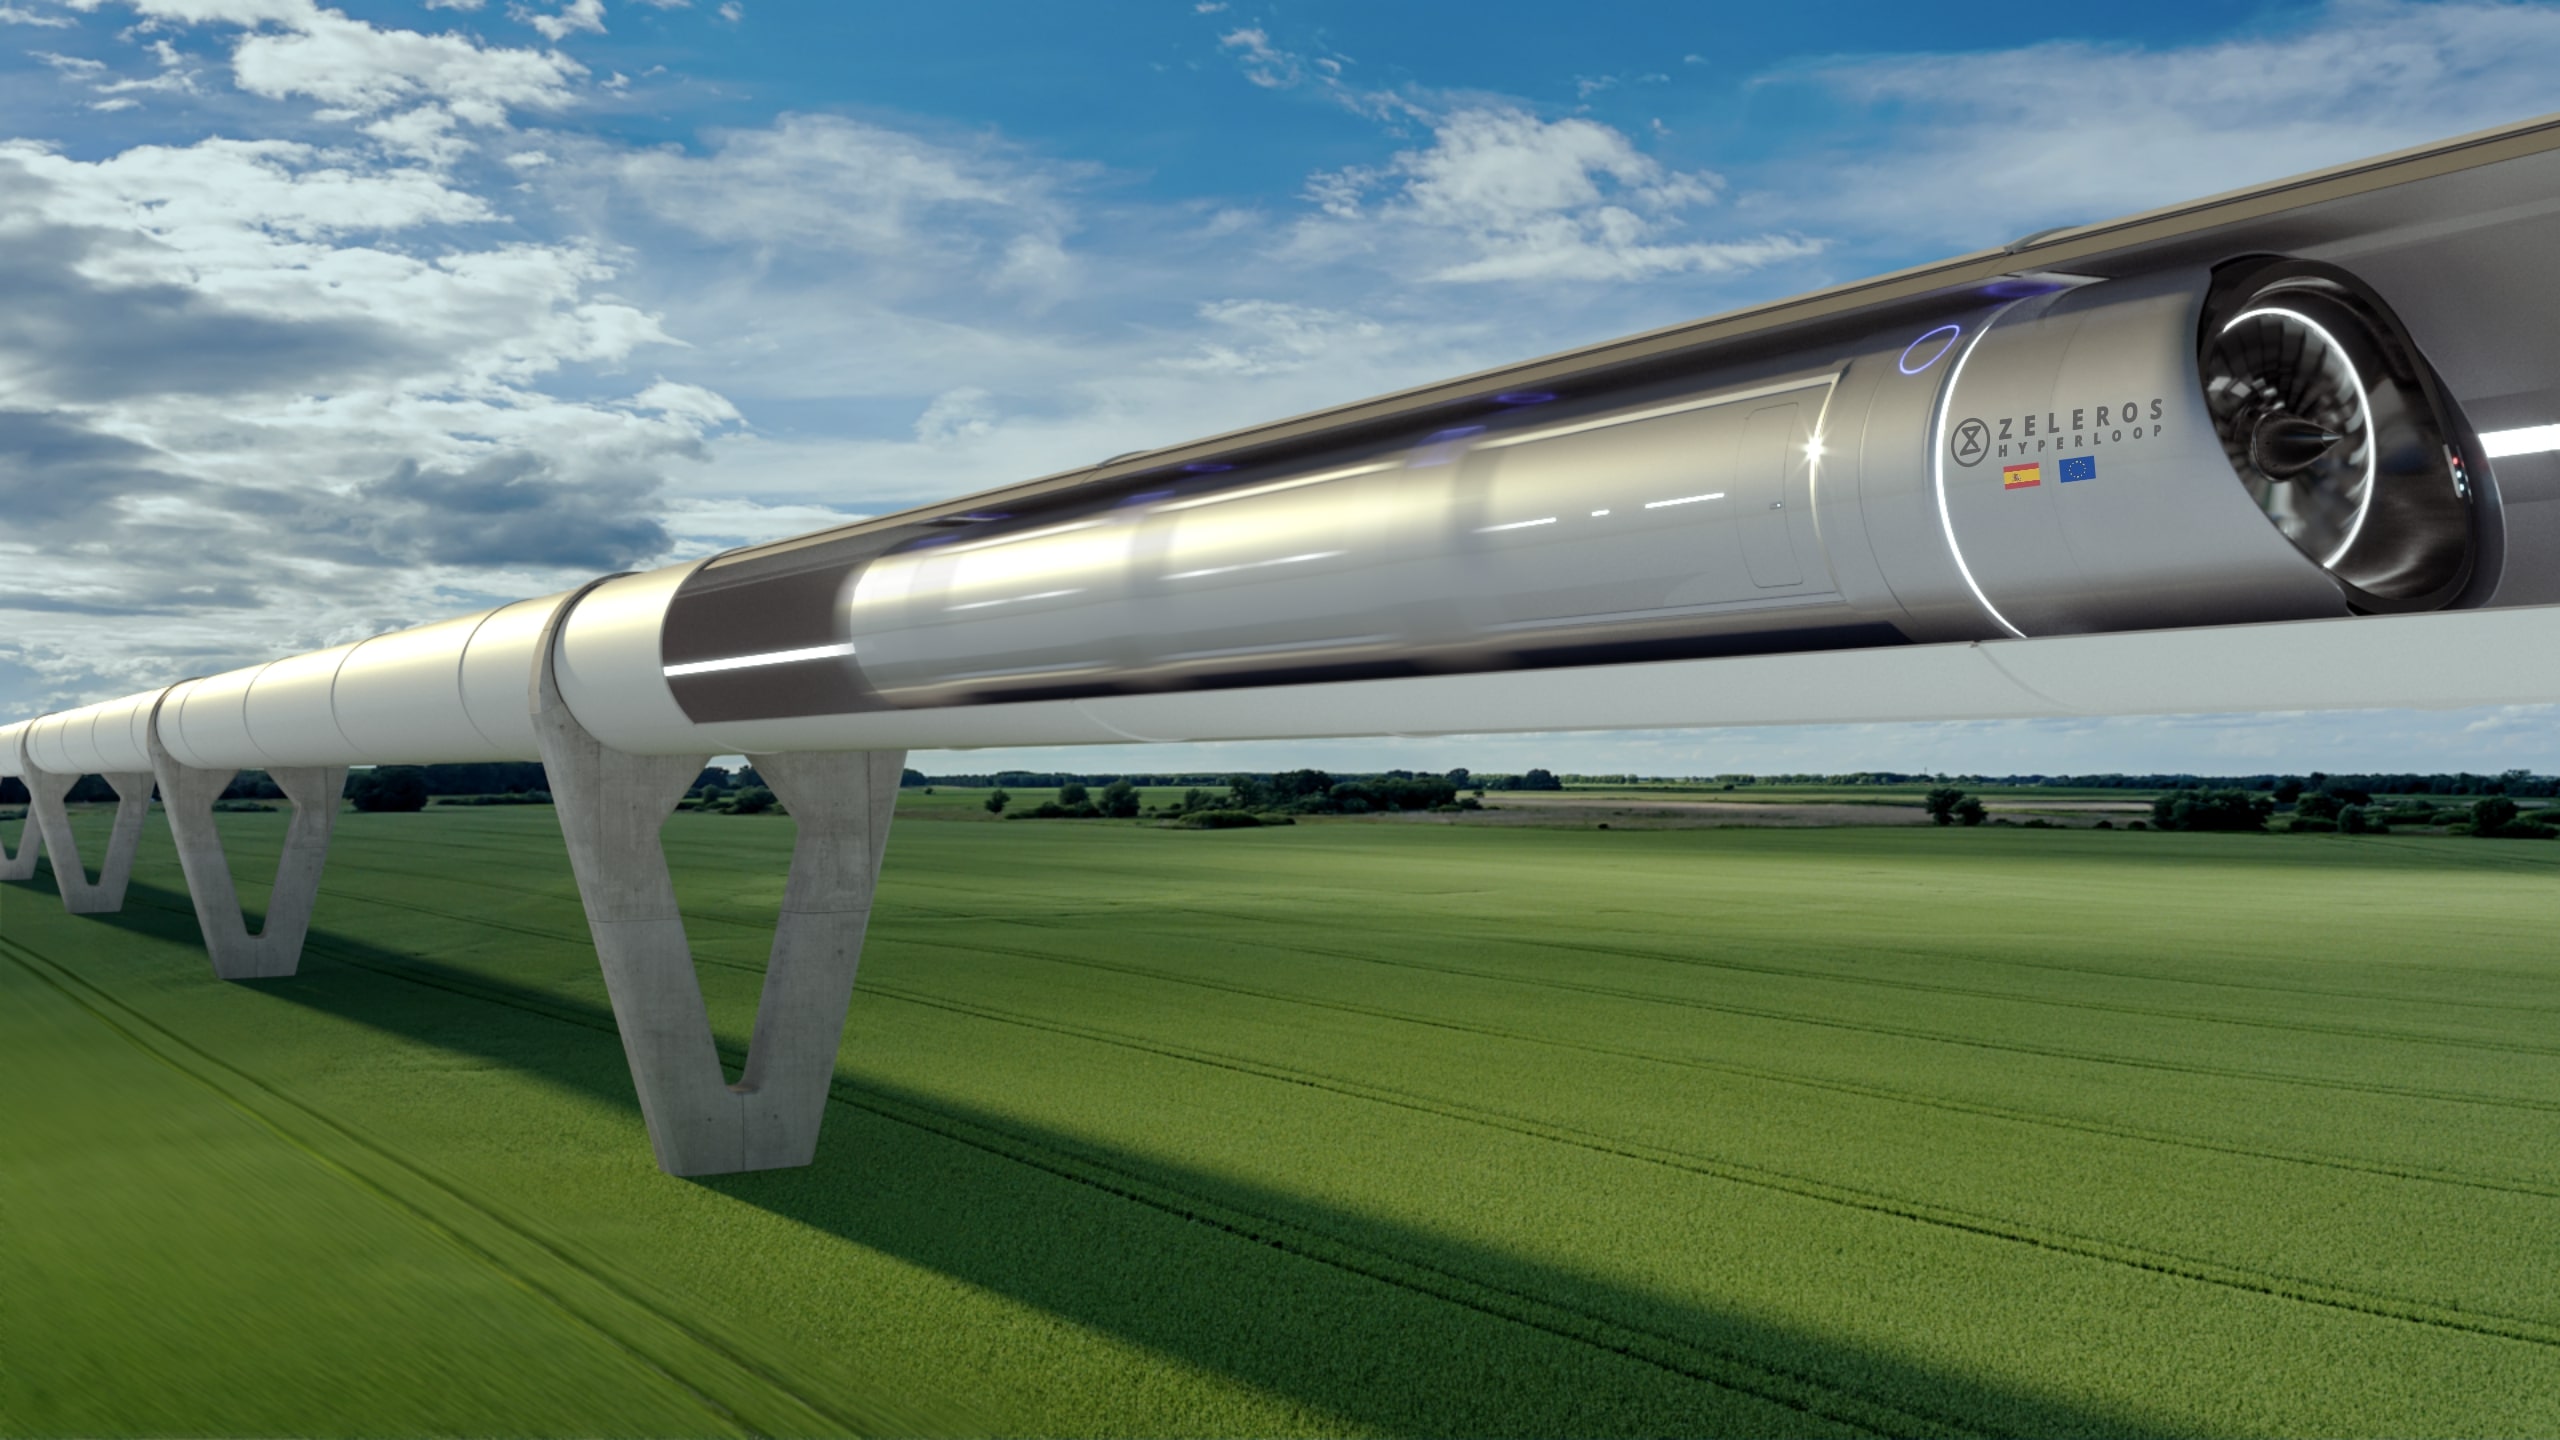 Доставить з Женеви в Цюрих за 17 хвилин: у Швейцарії розробляють надпотужну систему Hyperloop